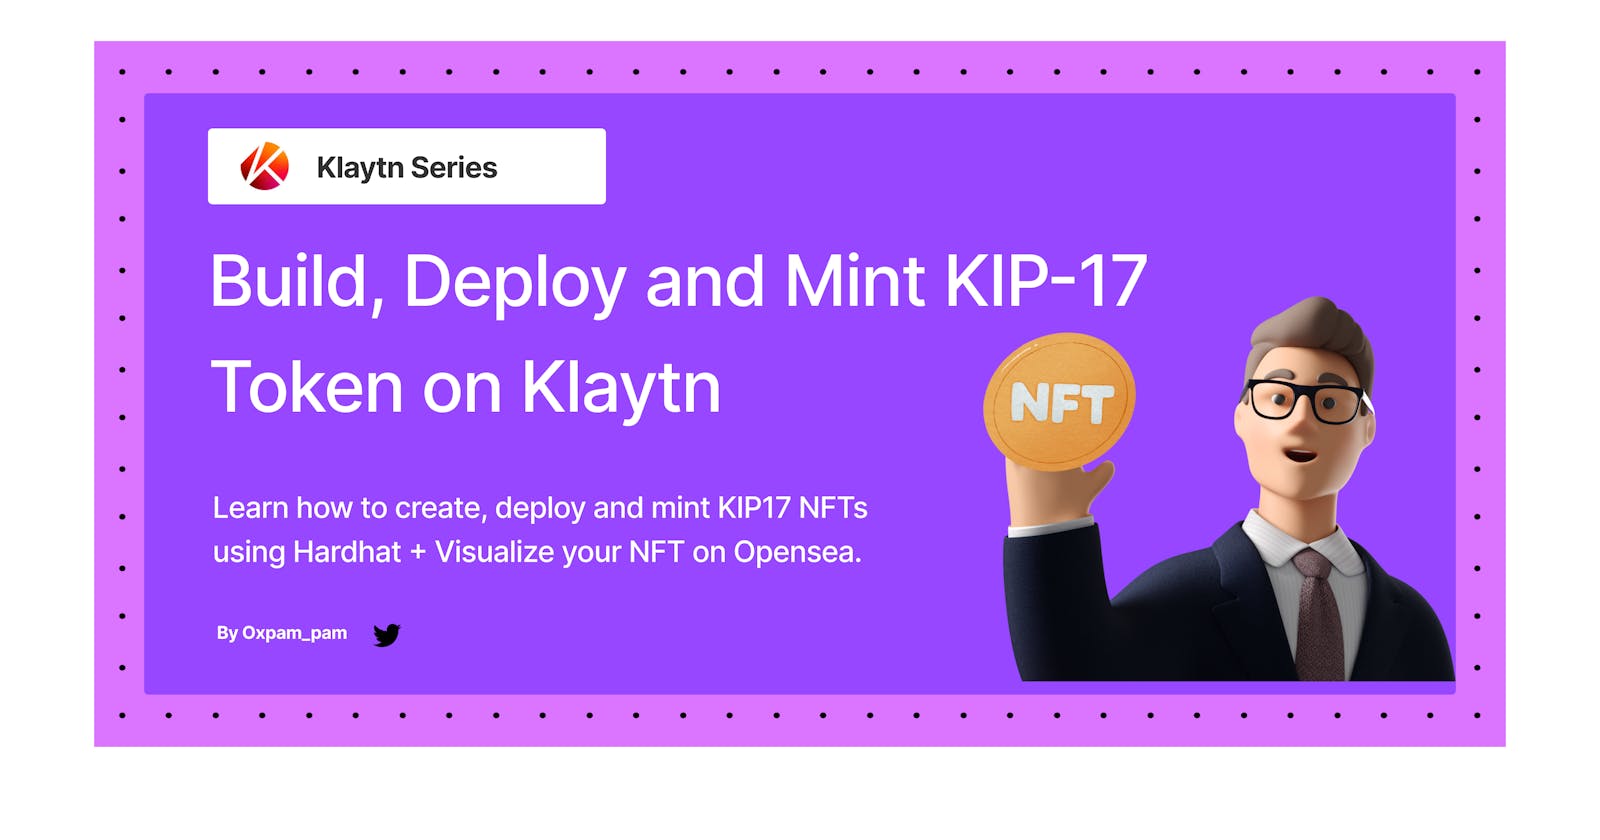 Build, Deploy and Mint KIP17 Token on Klaytn